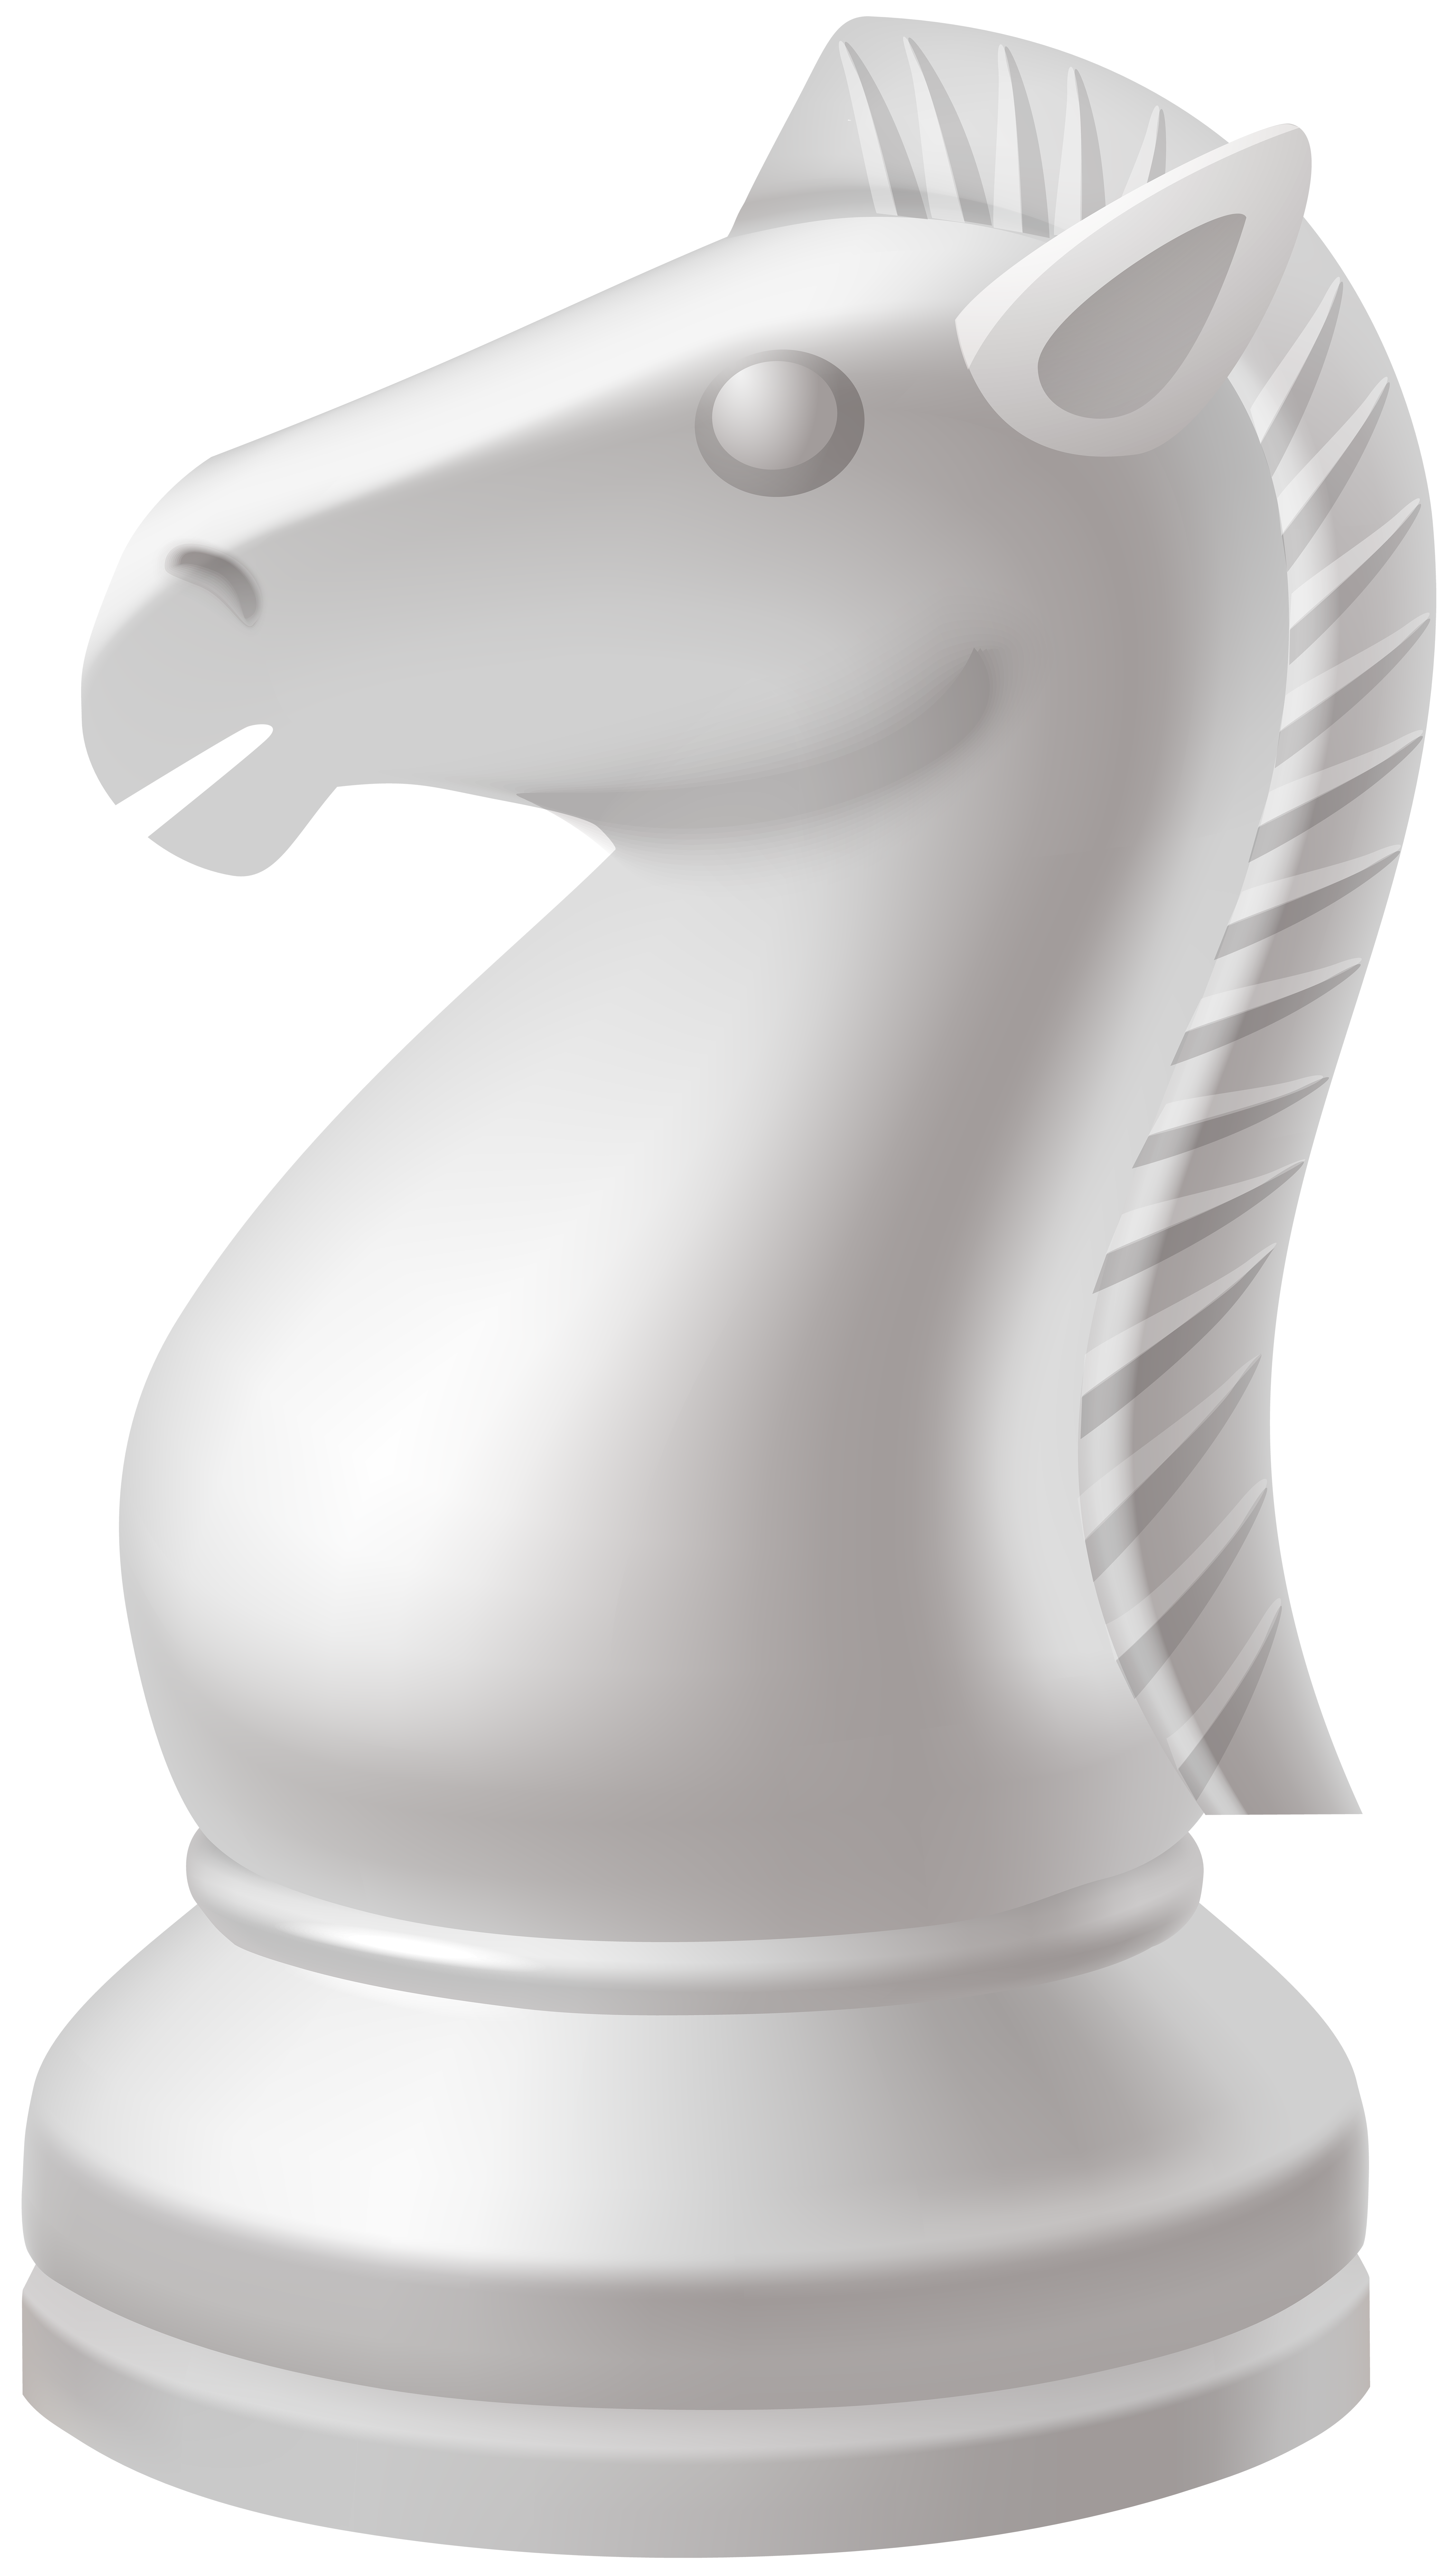 Black Chess Pieces PNG Clipart - Best WEB Clipart